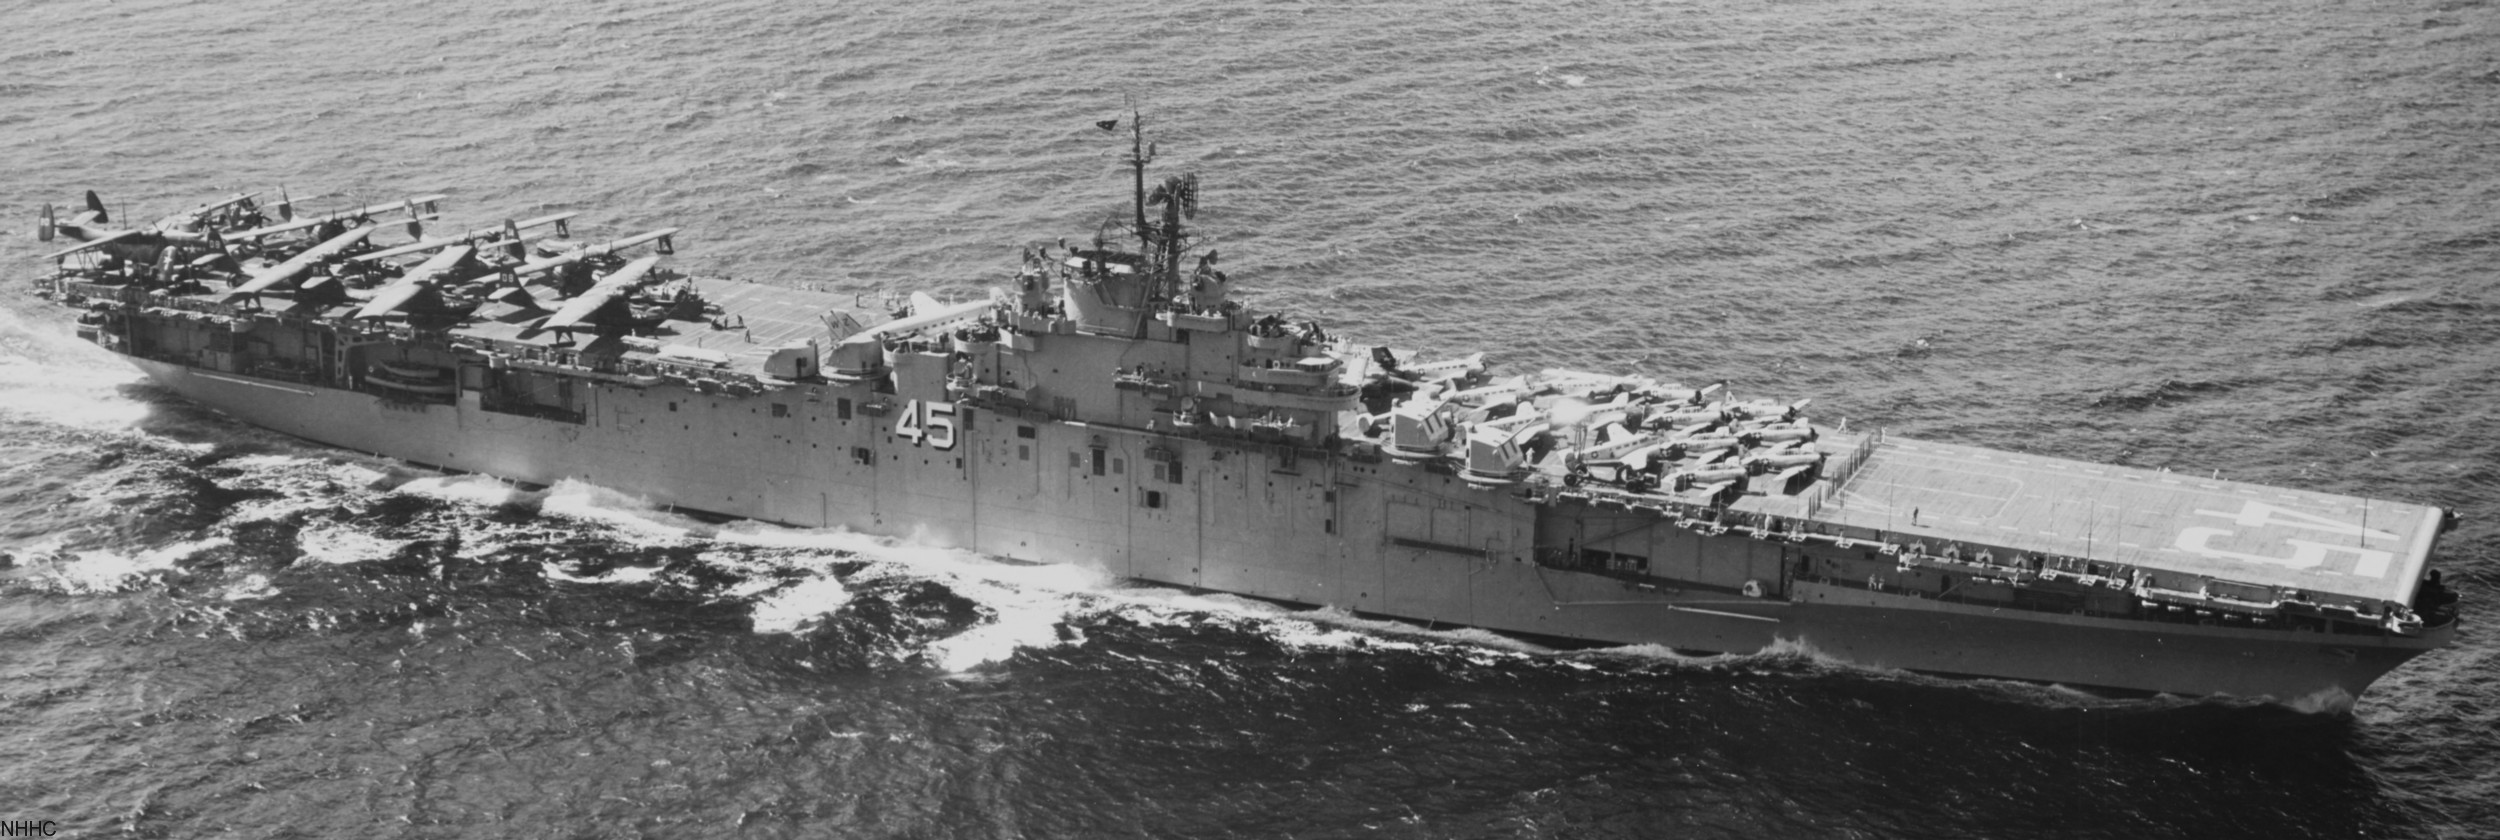 cv-45 uss valley forge essex class aircraft carrier us navy 38